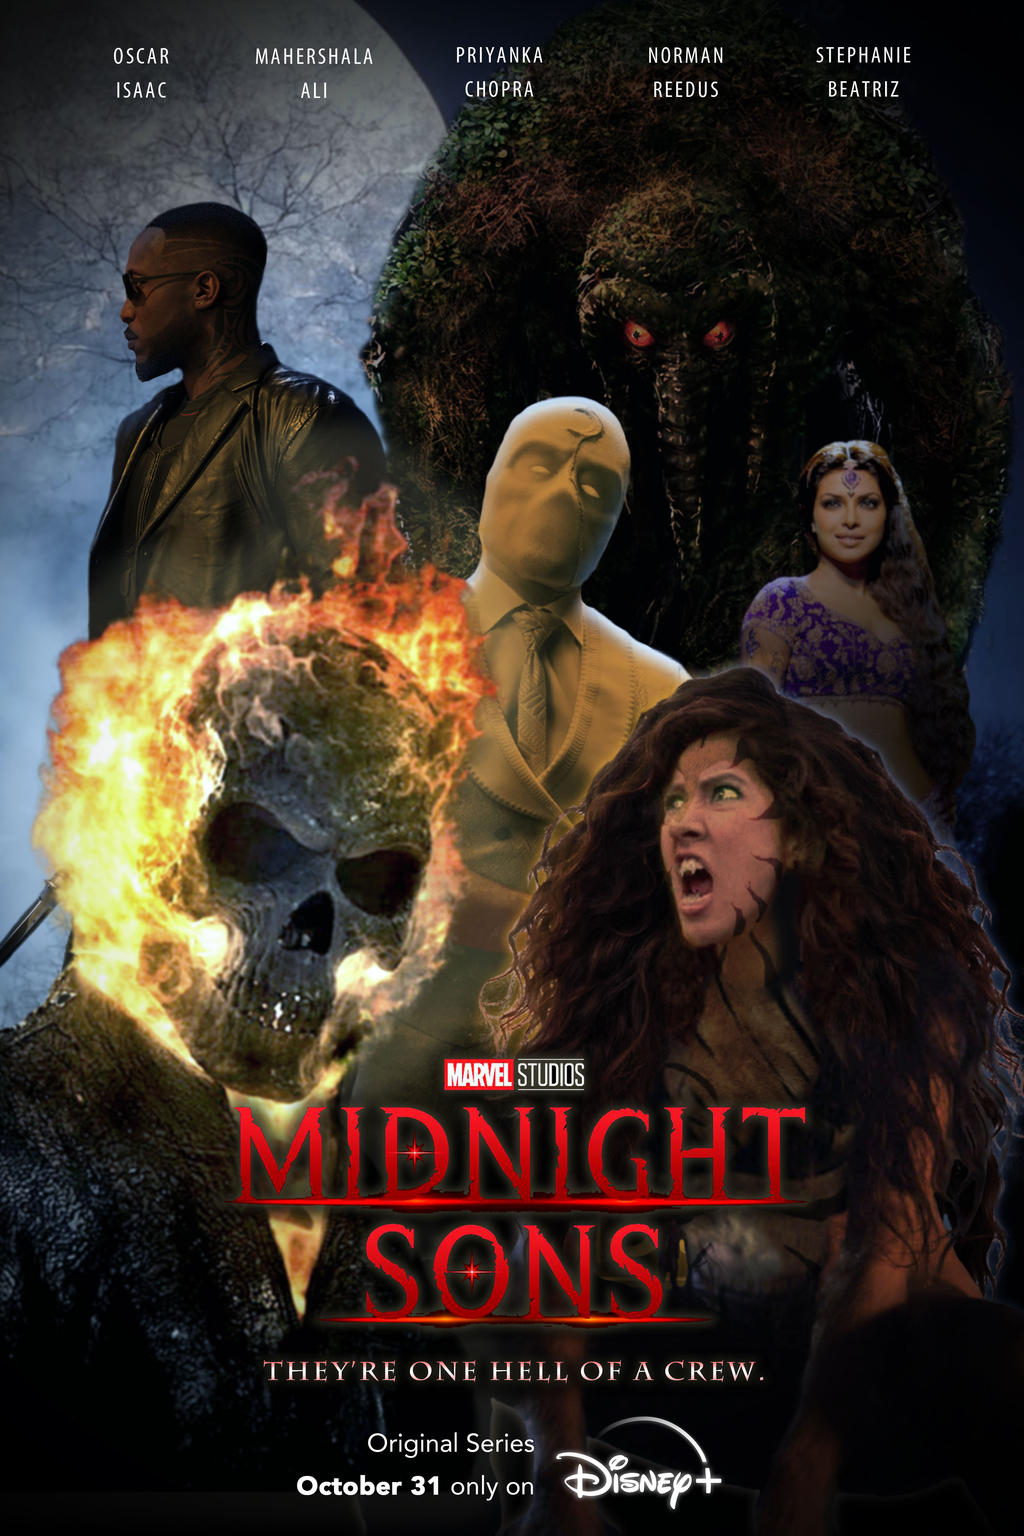 MCU Midnight Sons (Fan Version) by imdb88 on DeviantArt